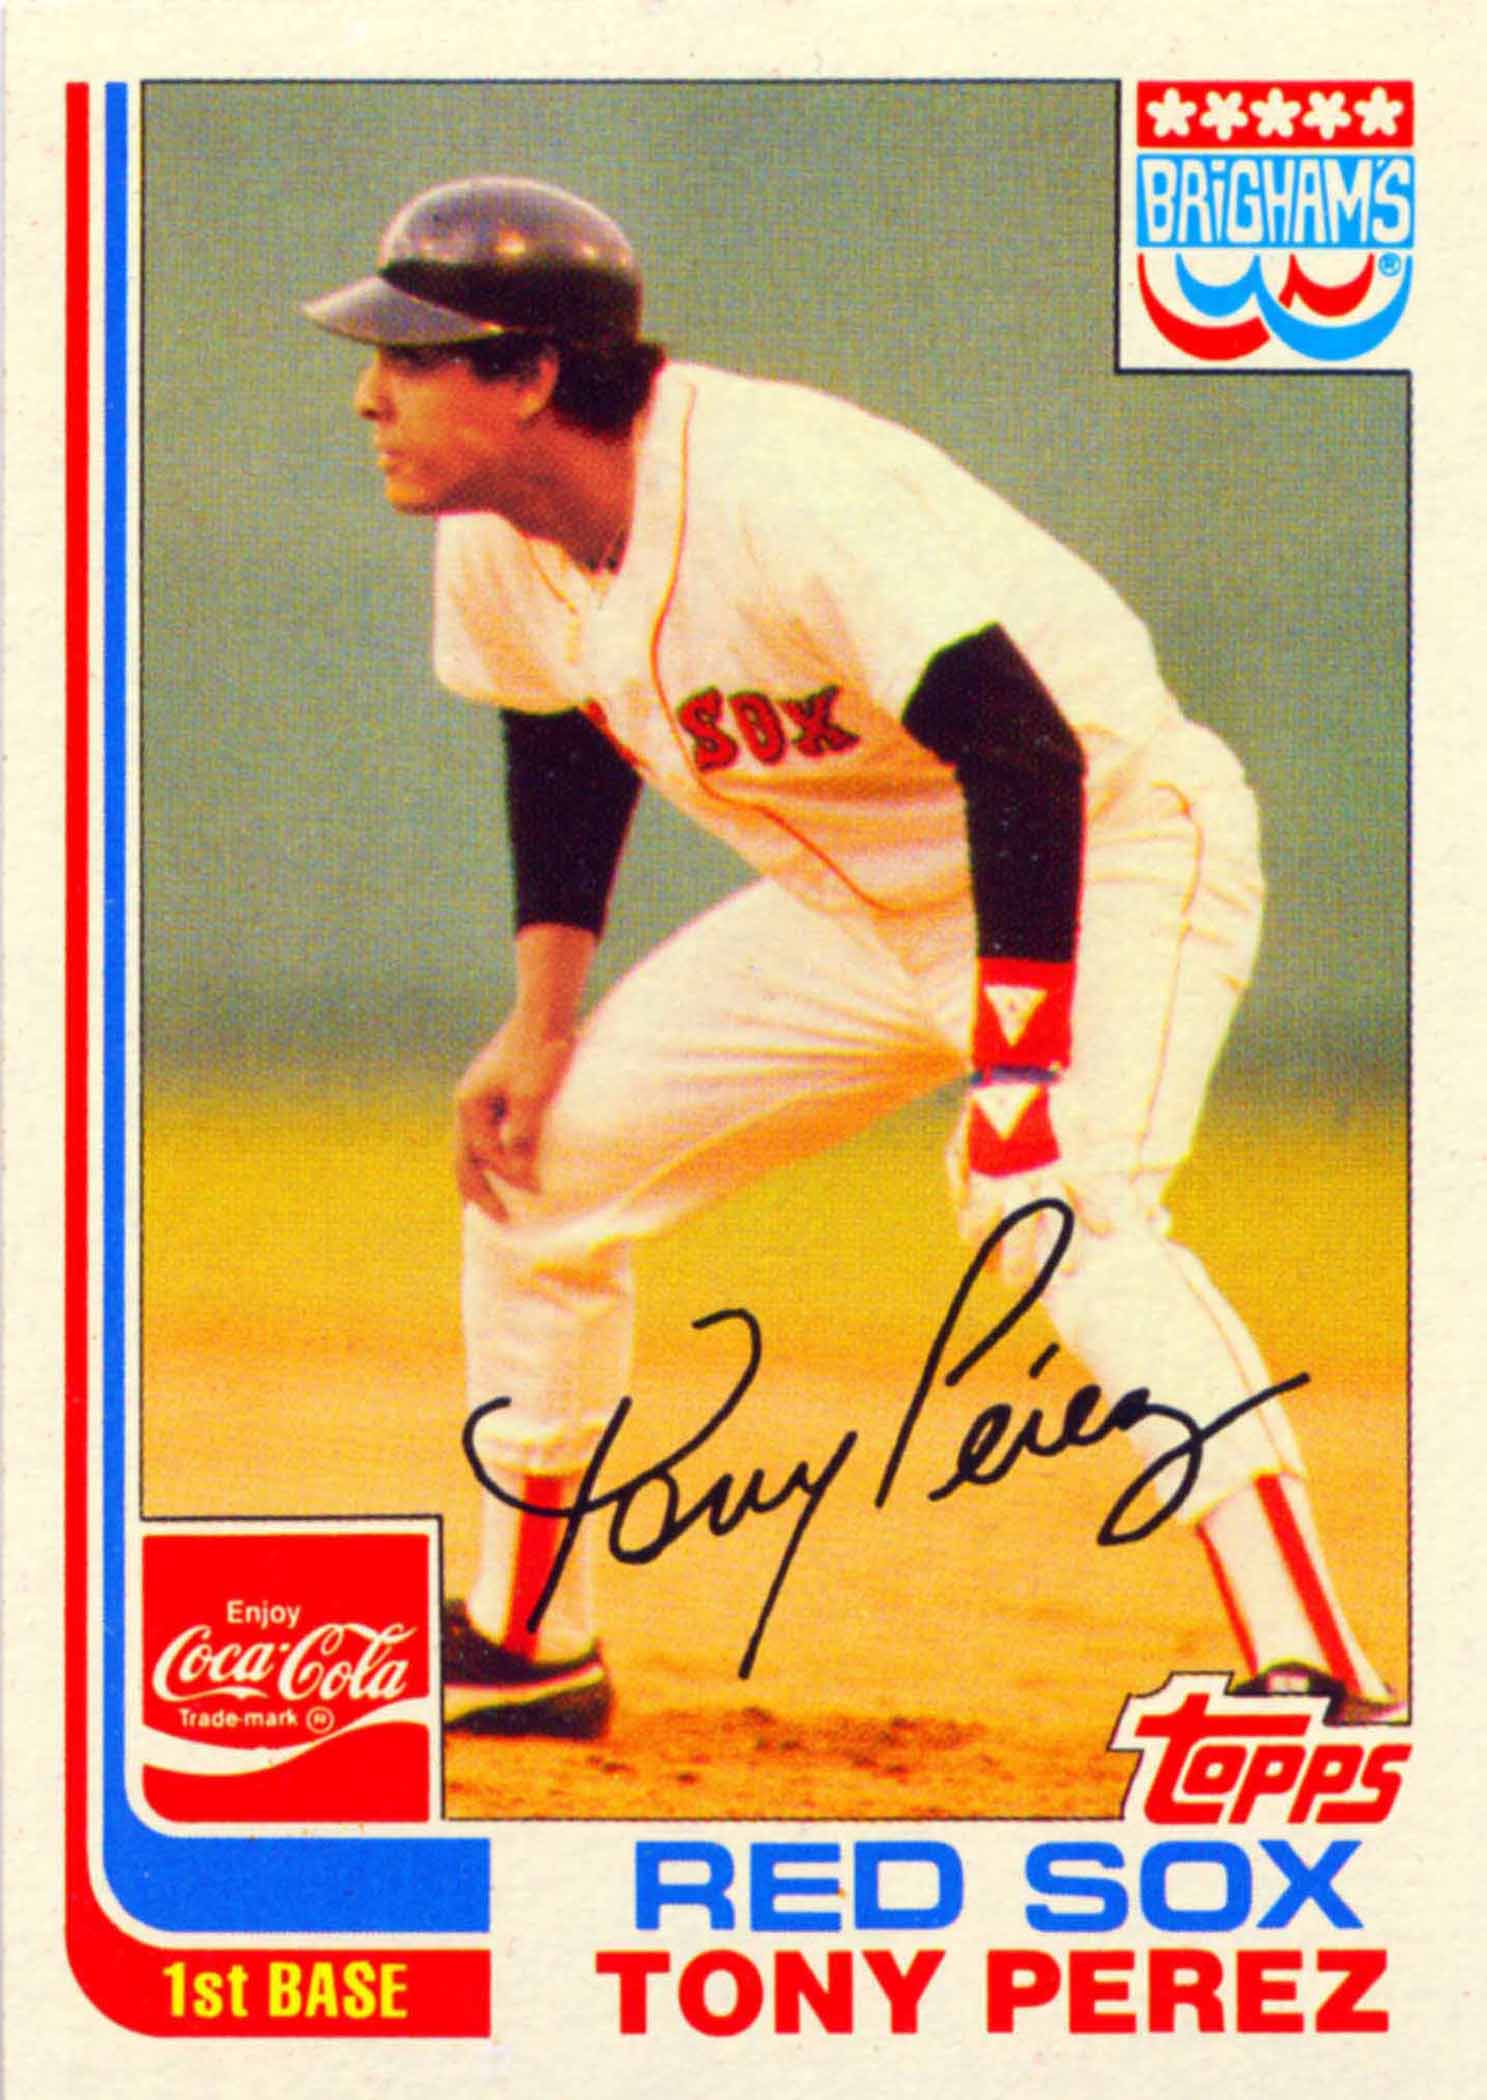 1982 Red Sox Coke